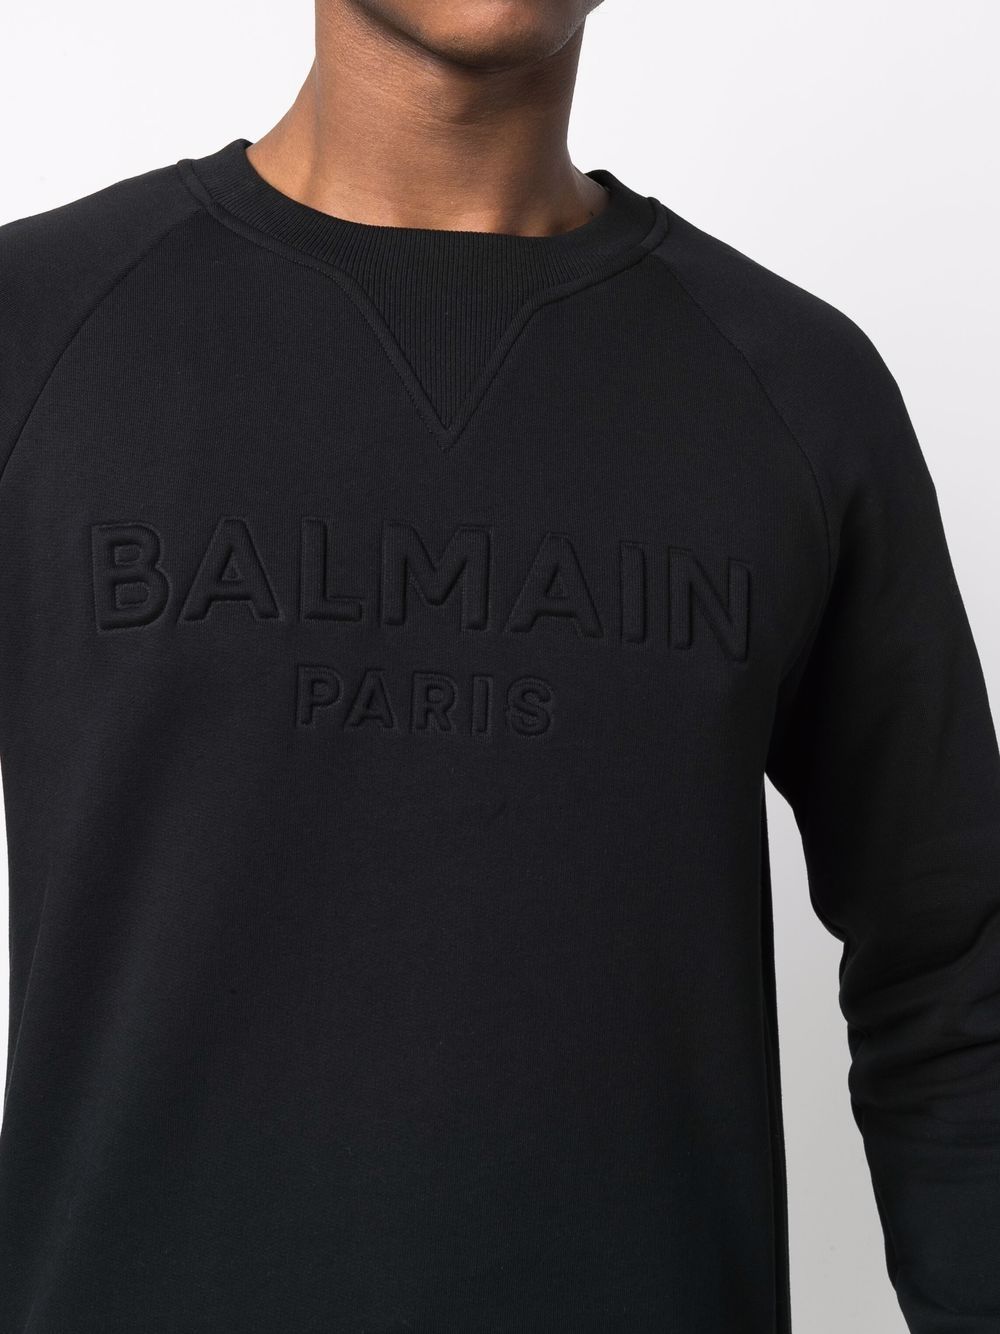 BALMAIN Logo Sweatshirt Black